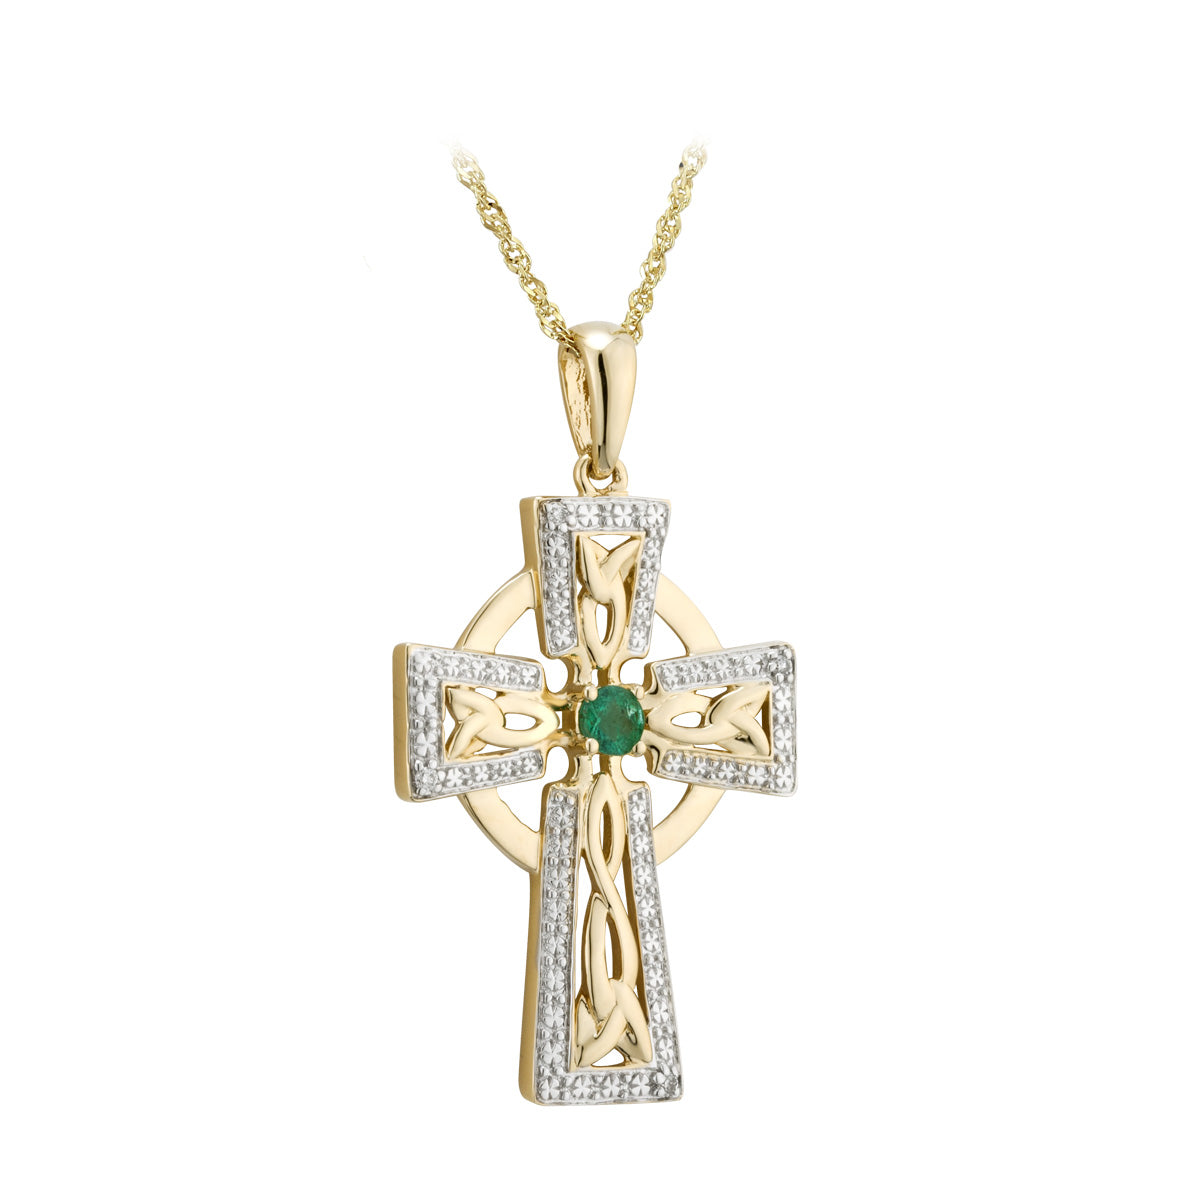 14k gold diamond and emerald large cross pendant s46102 from Solvar